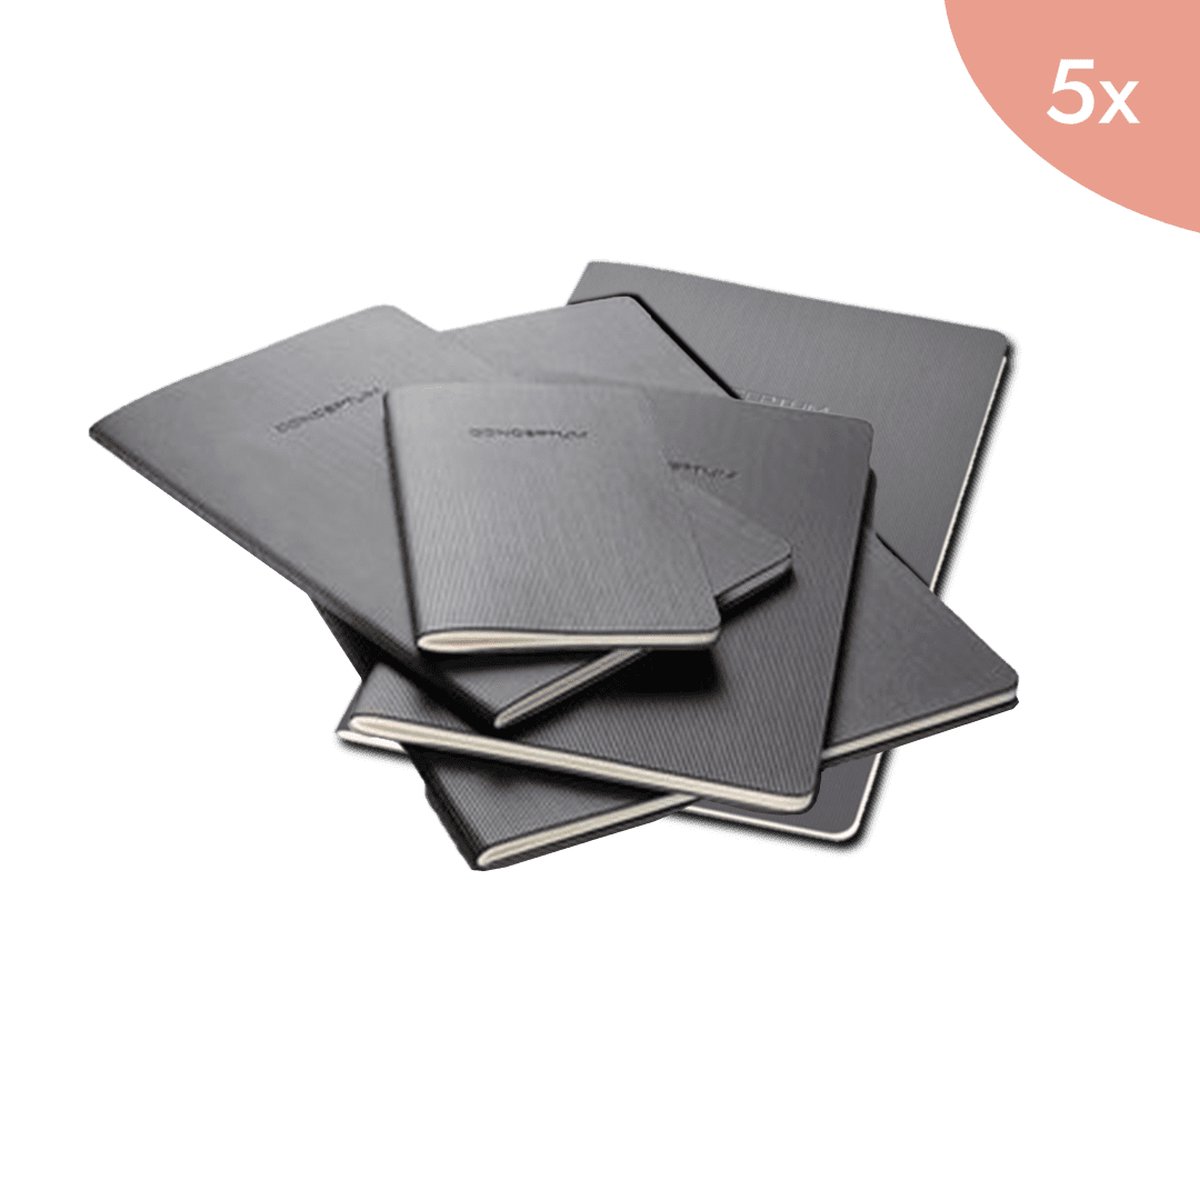 5x Sigel Notitieboekje Conceptum A4 zwart 5mm ruit softcover. 64 pagina's 80 grams chamoiskleurig papier